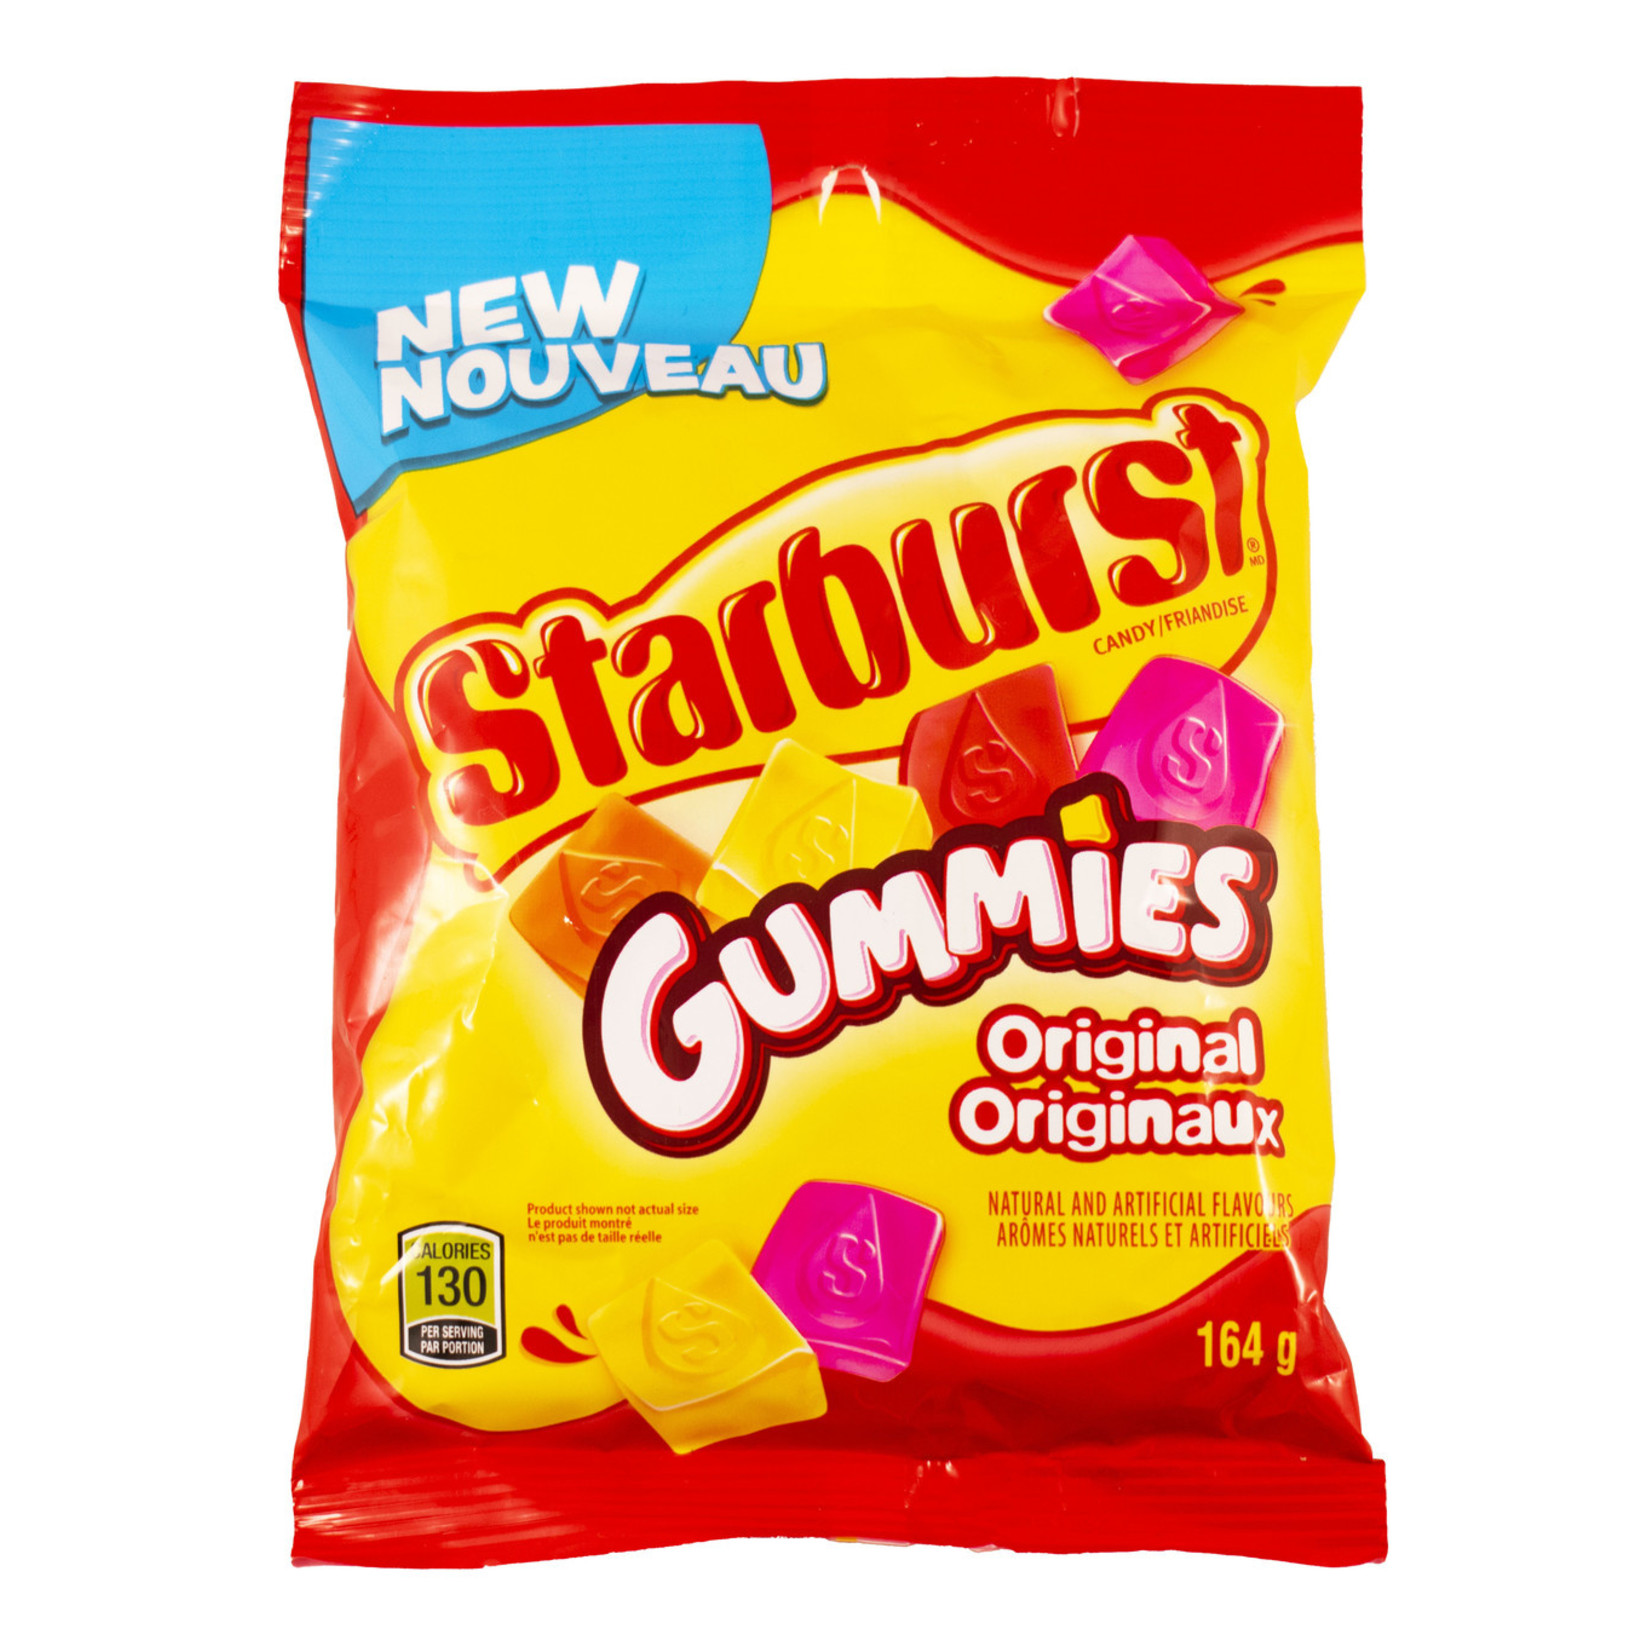 Starburst Gummies original 164g